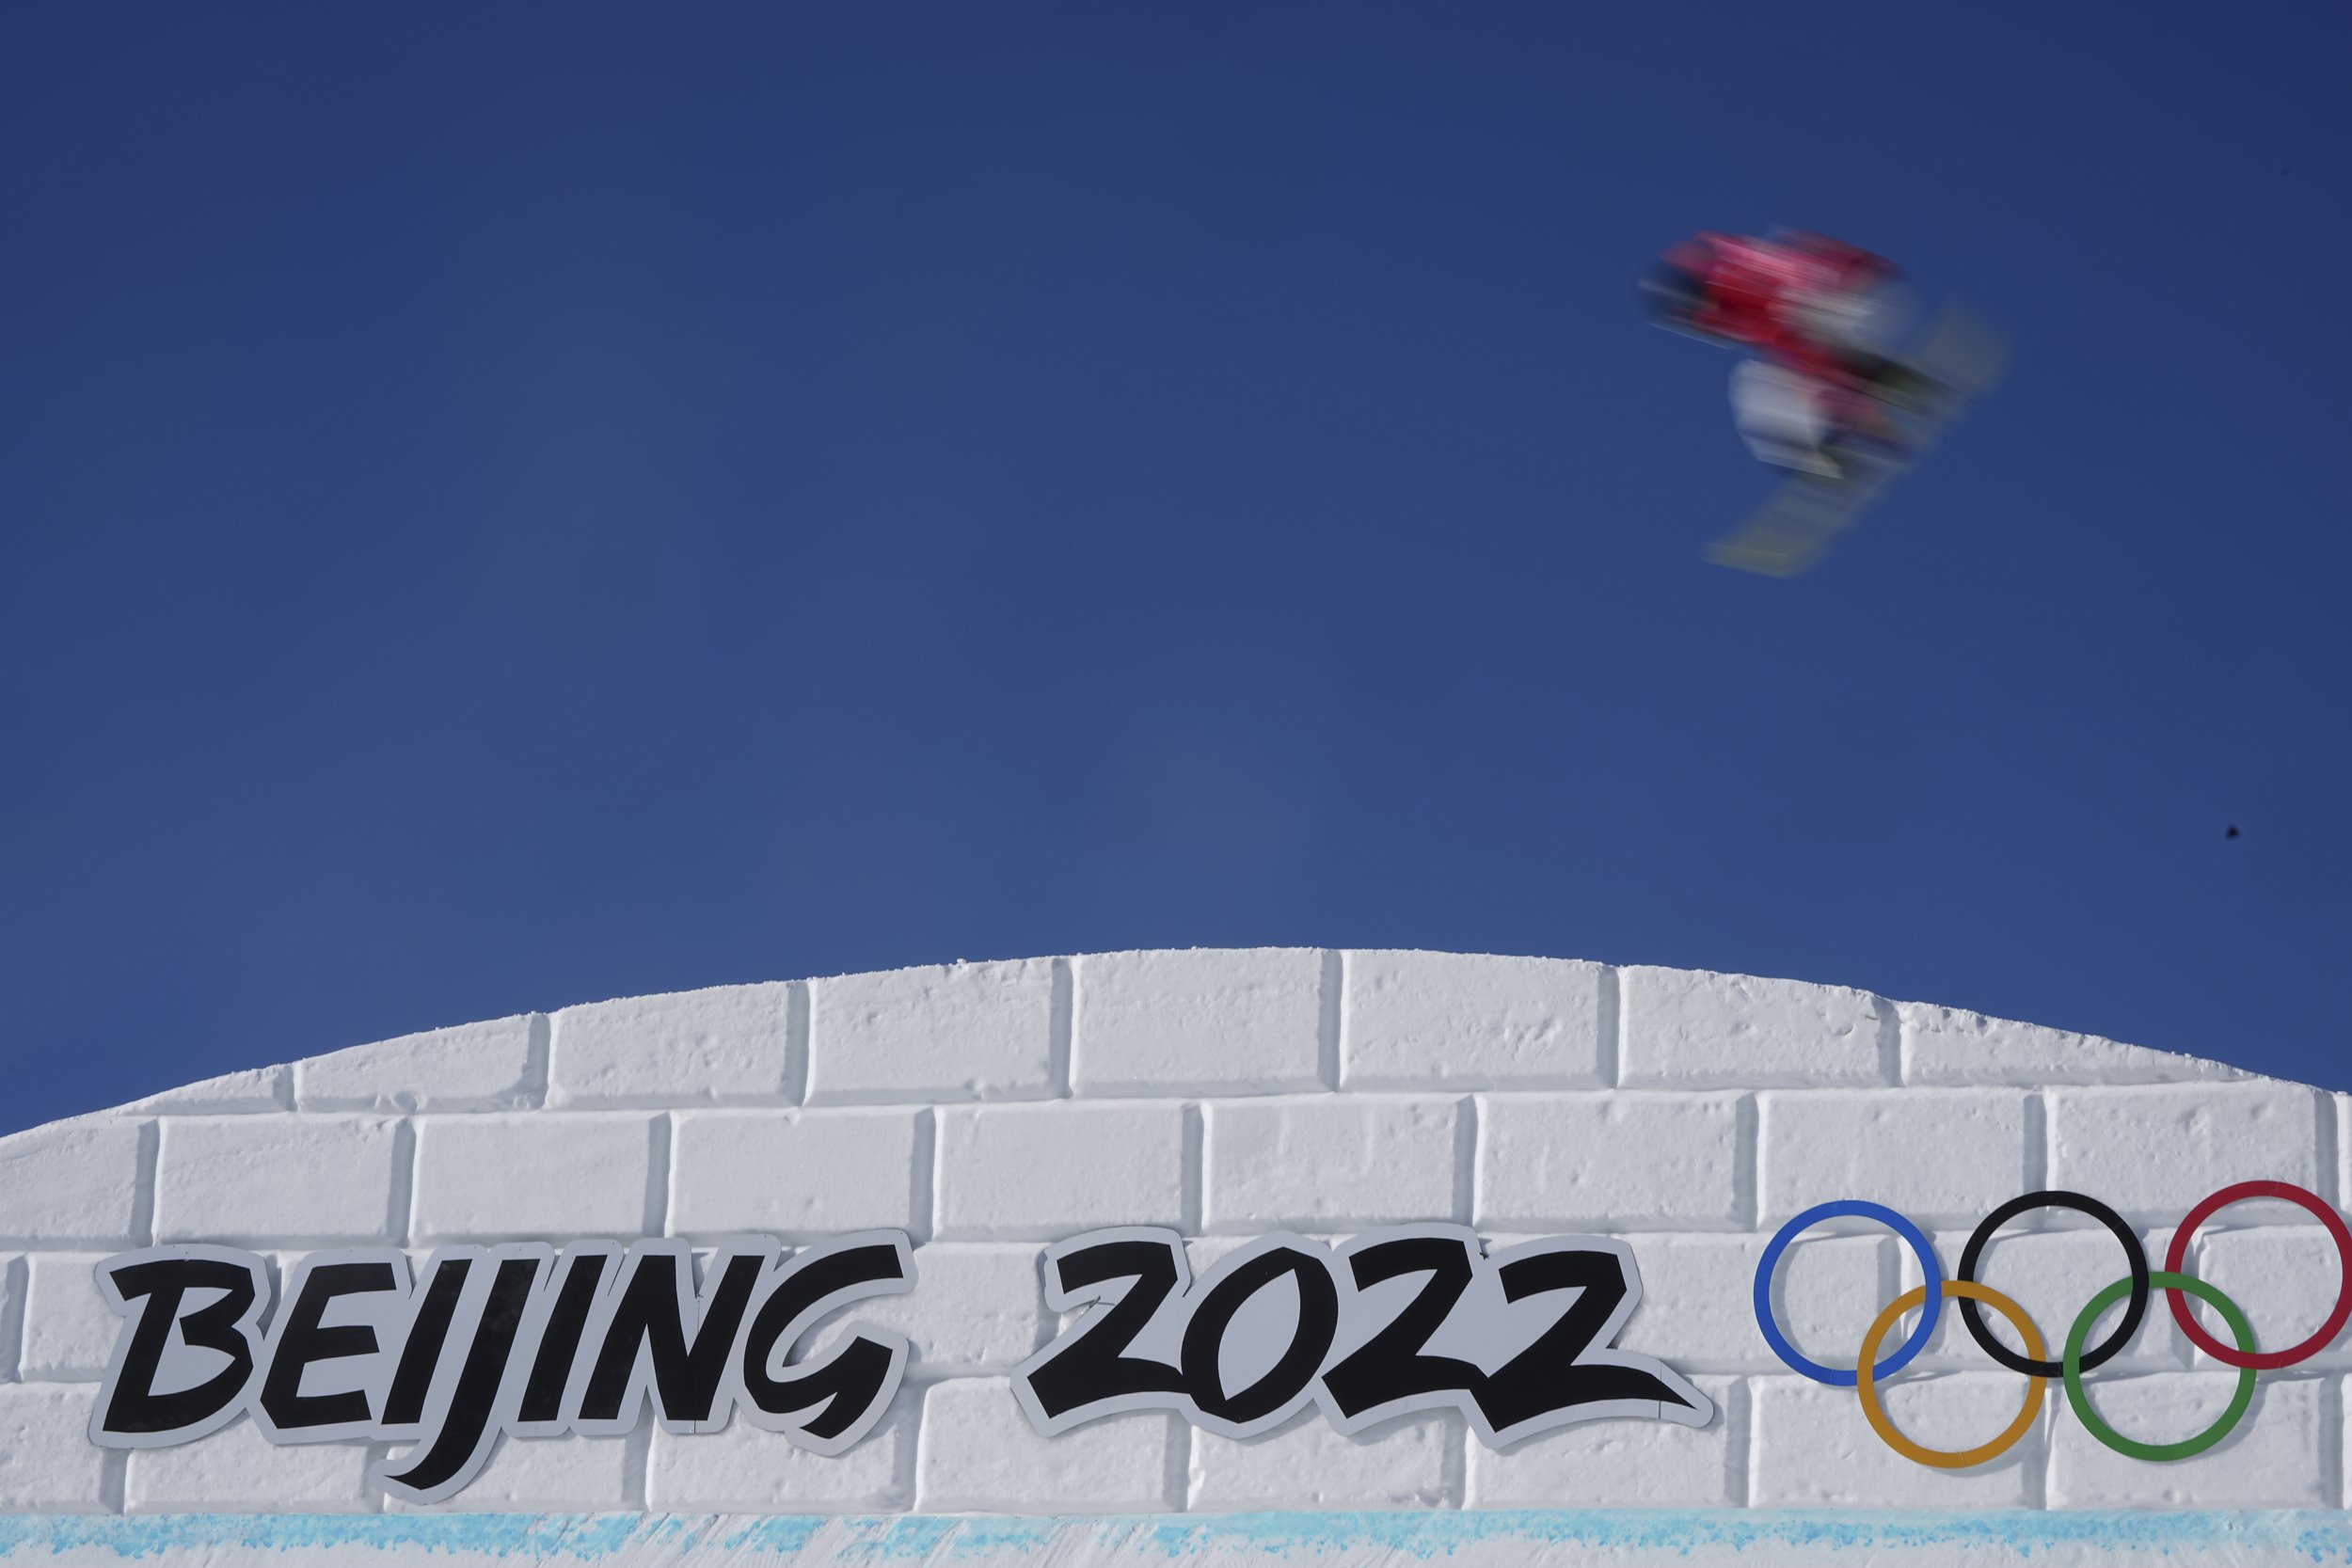  Japan's Ruki Tobita competes during the men's slopestyle qualifying at the 2022 Winter Olympics, Sunday, Feb. 6, 2022, in Zhangjiakou, China. (AP Photo/Gregory Bull) 